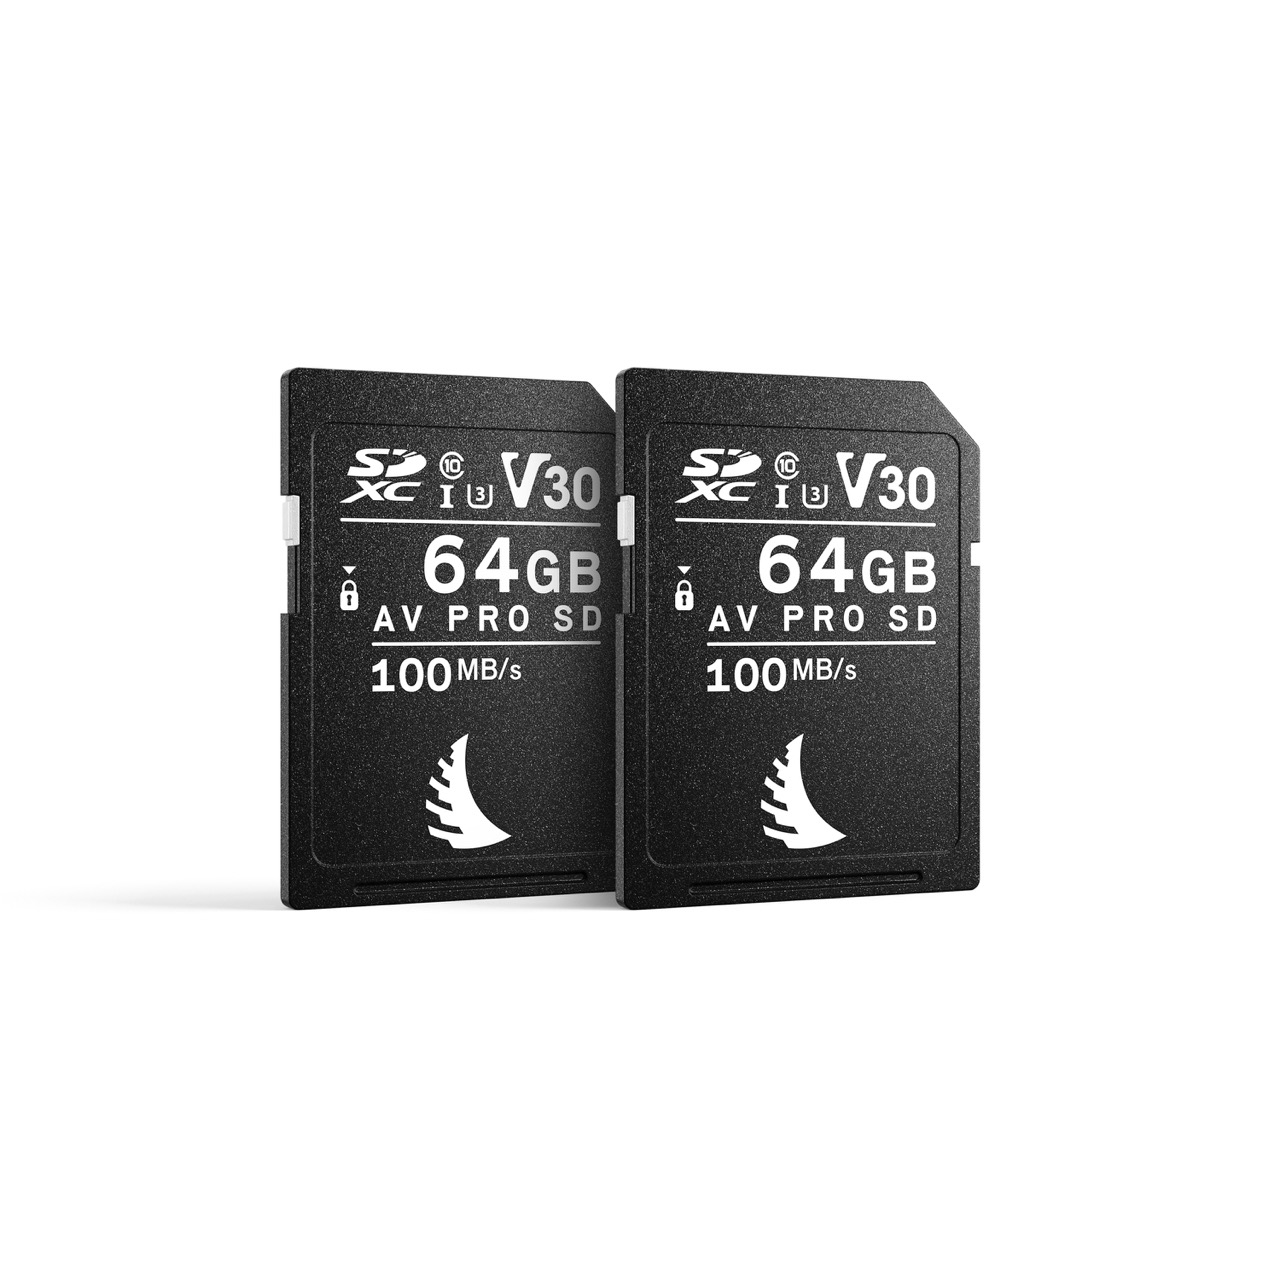 Angelbird Match Pack V30 64GB AV PRO SD Speicherkarten, 2 Karten schräg